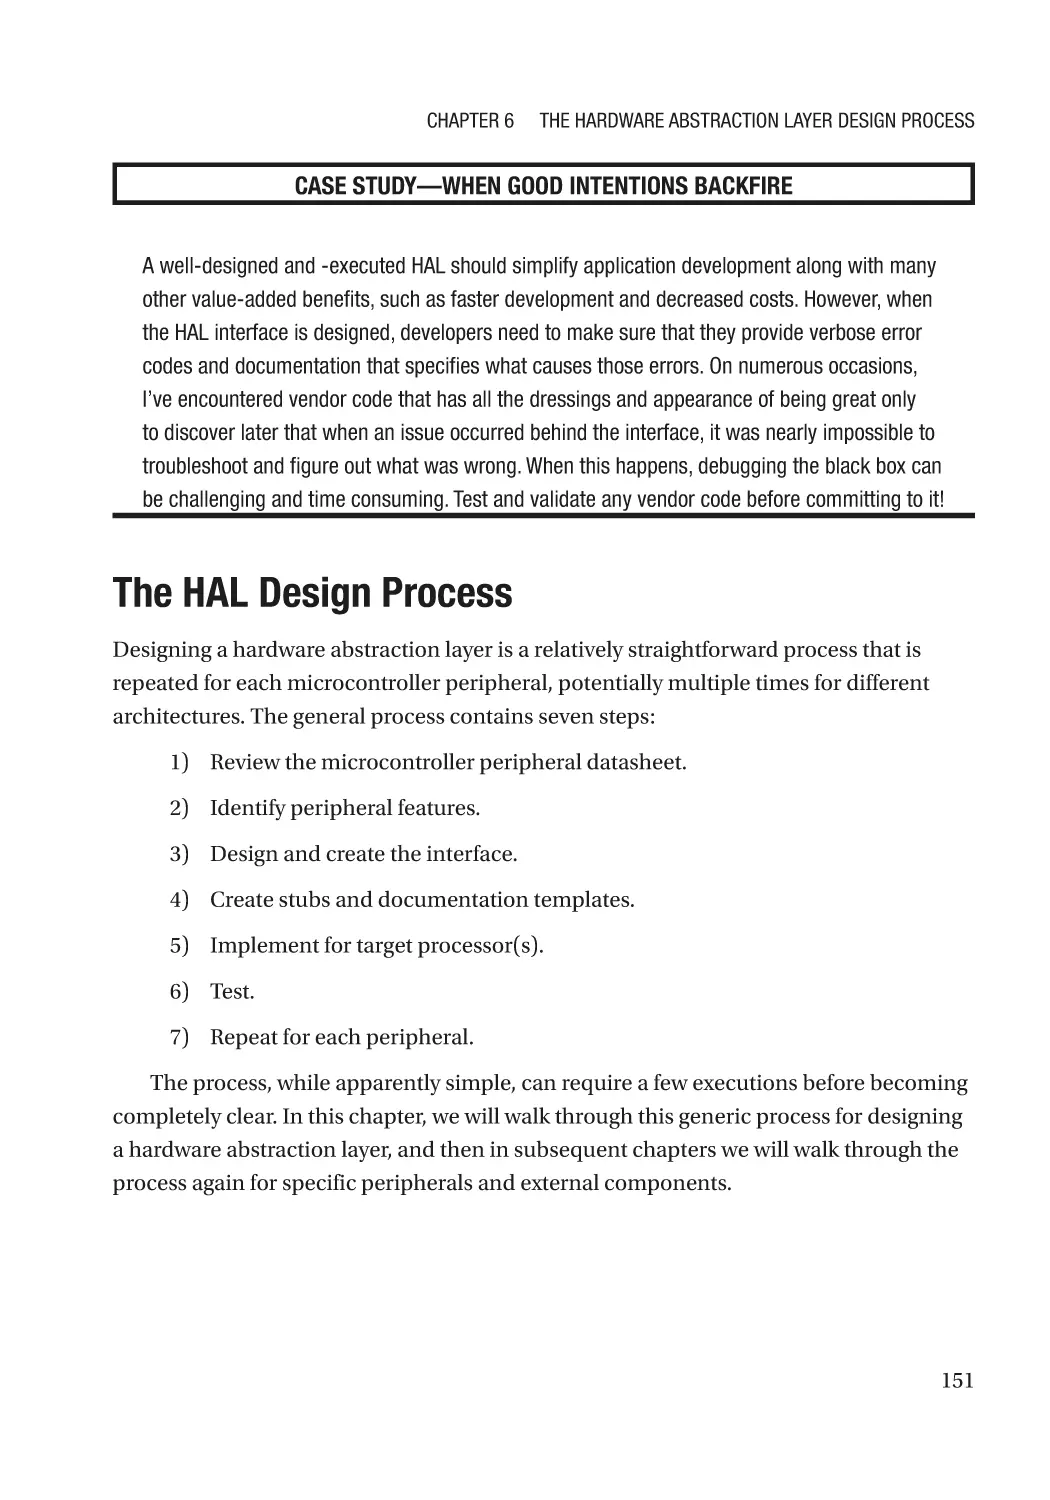 The HAL Design Process